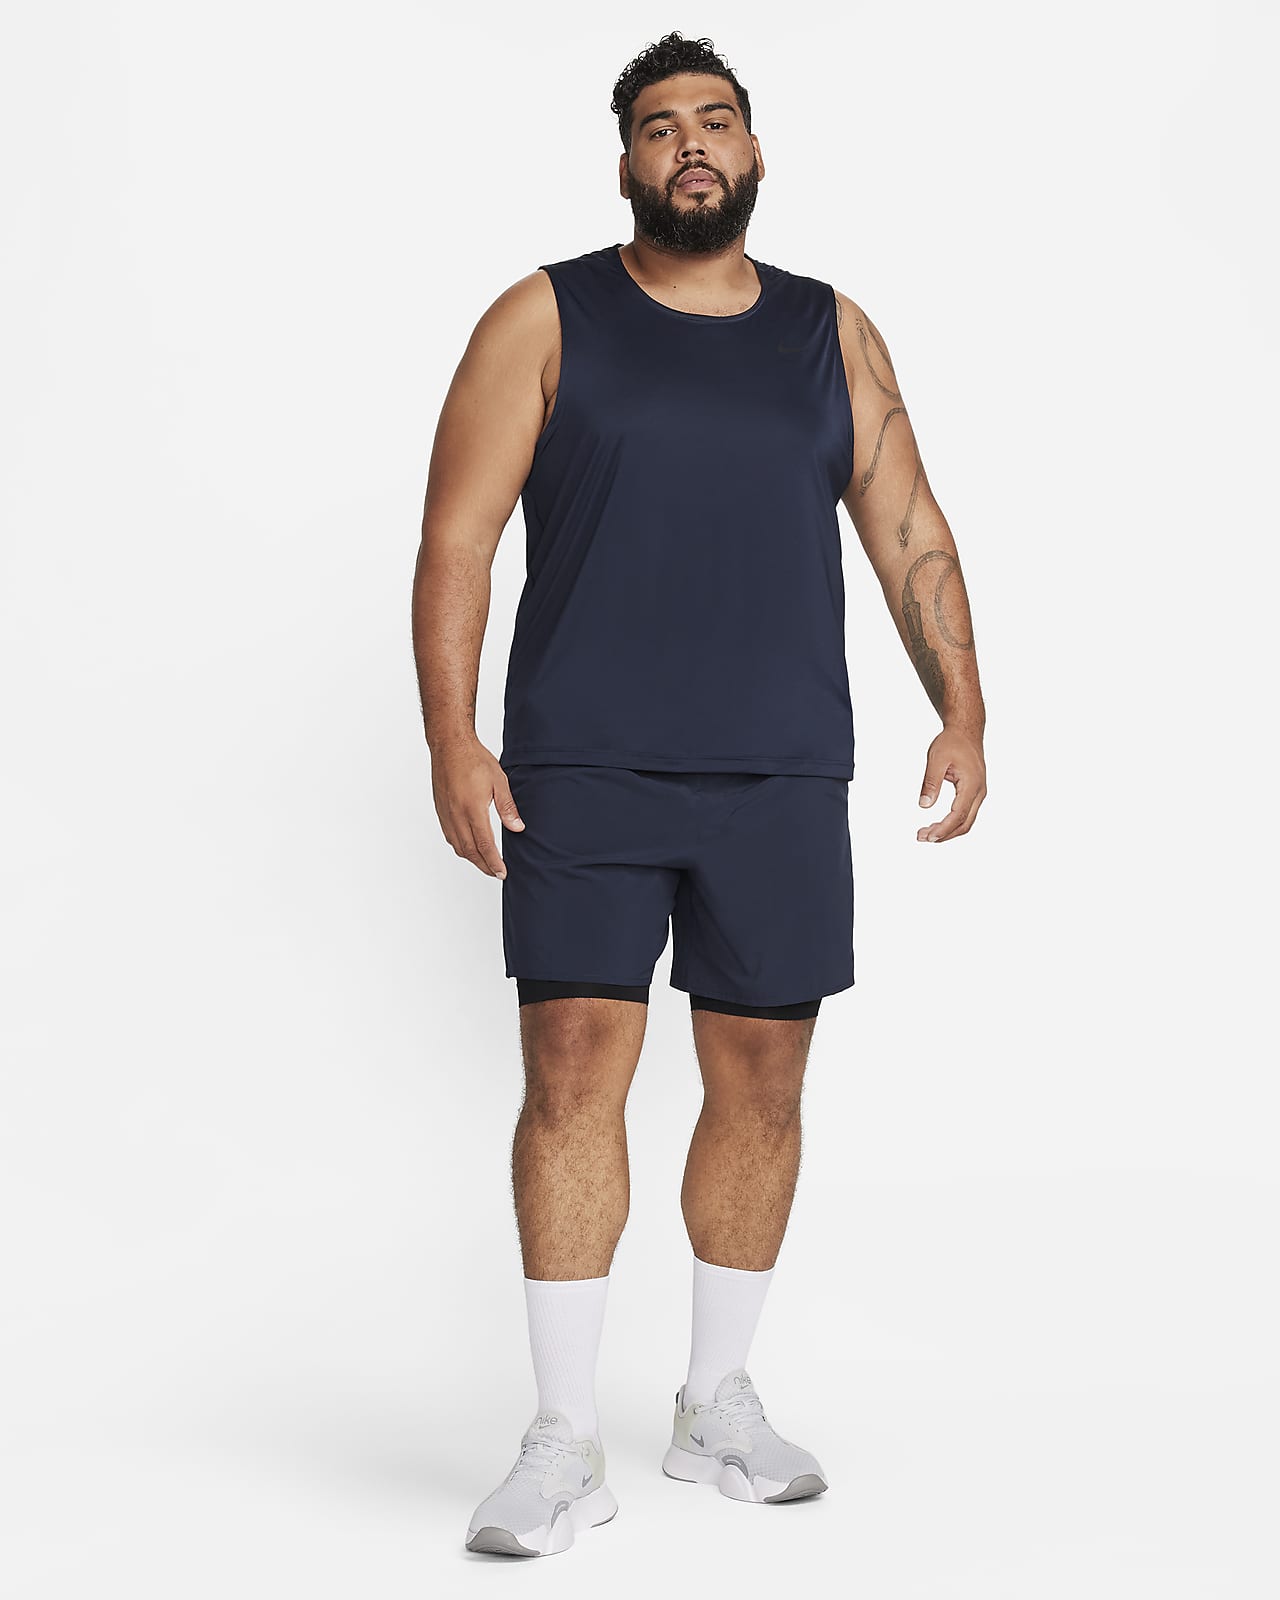 Nike Ready Men's Dri-FIT Fitness Tank Top. Nike LU